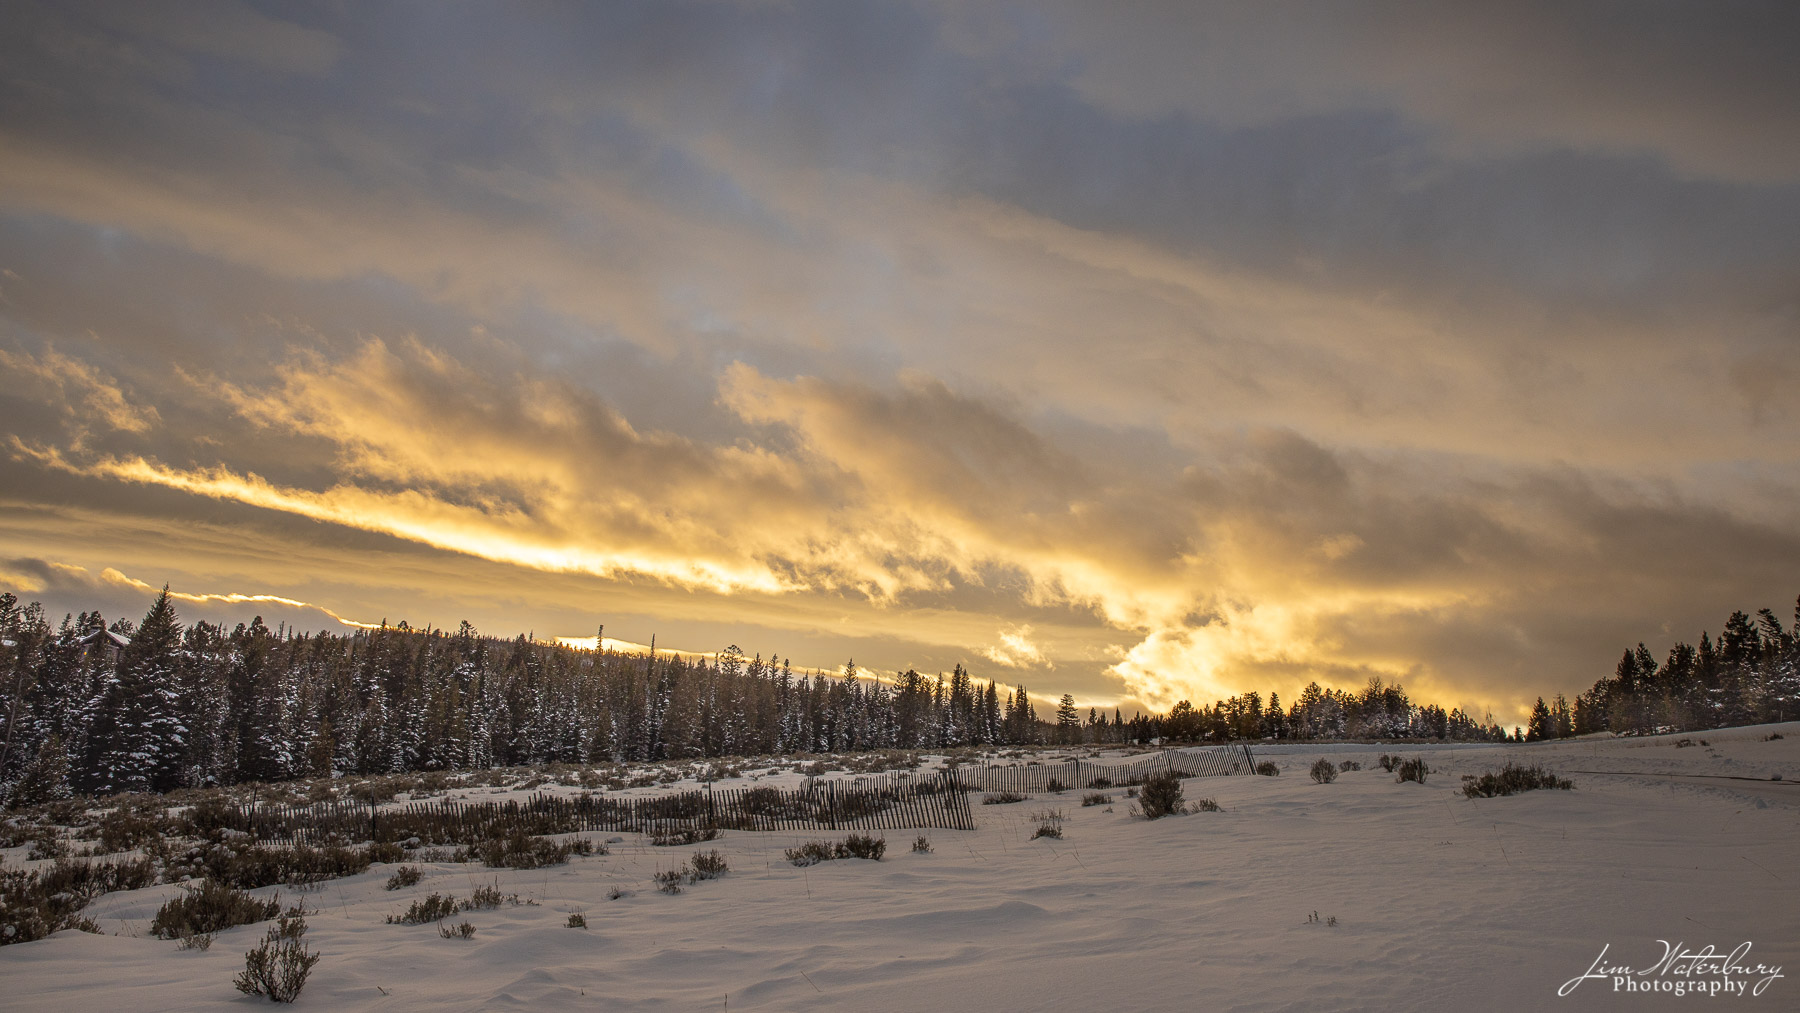 At sunset, the sun shines through darkening storm clouds at Spanish Peaks, Big Sky Ski Resort, Montana.